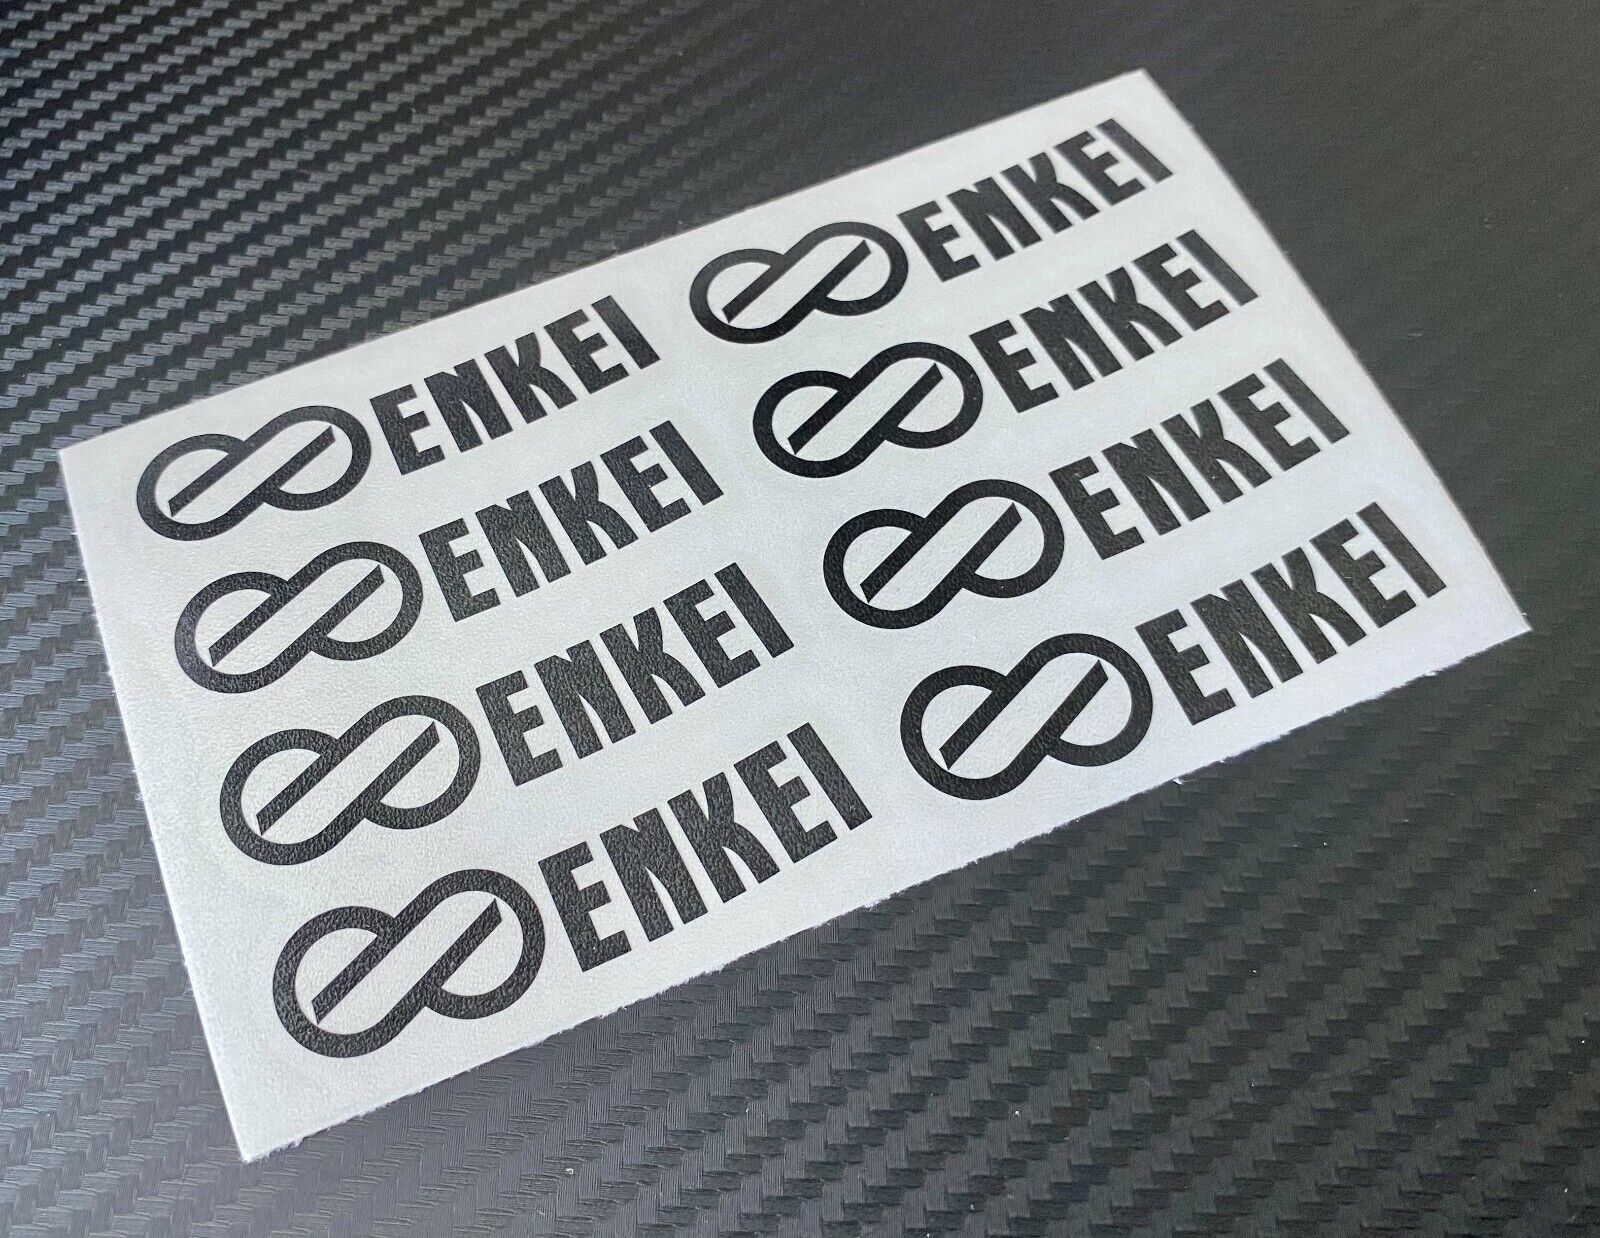 8 Enkei Logo Vinyl Decals Stickers for GTC01 PF01 RPF1 Wheels Rims